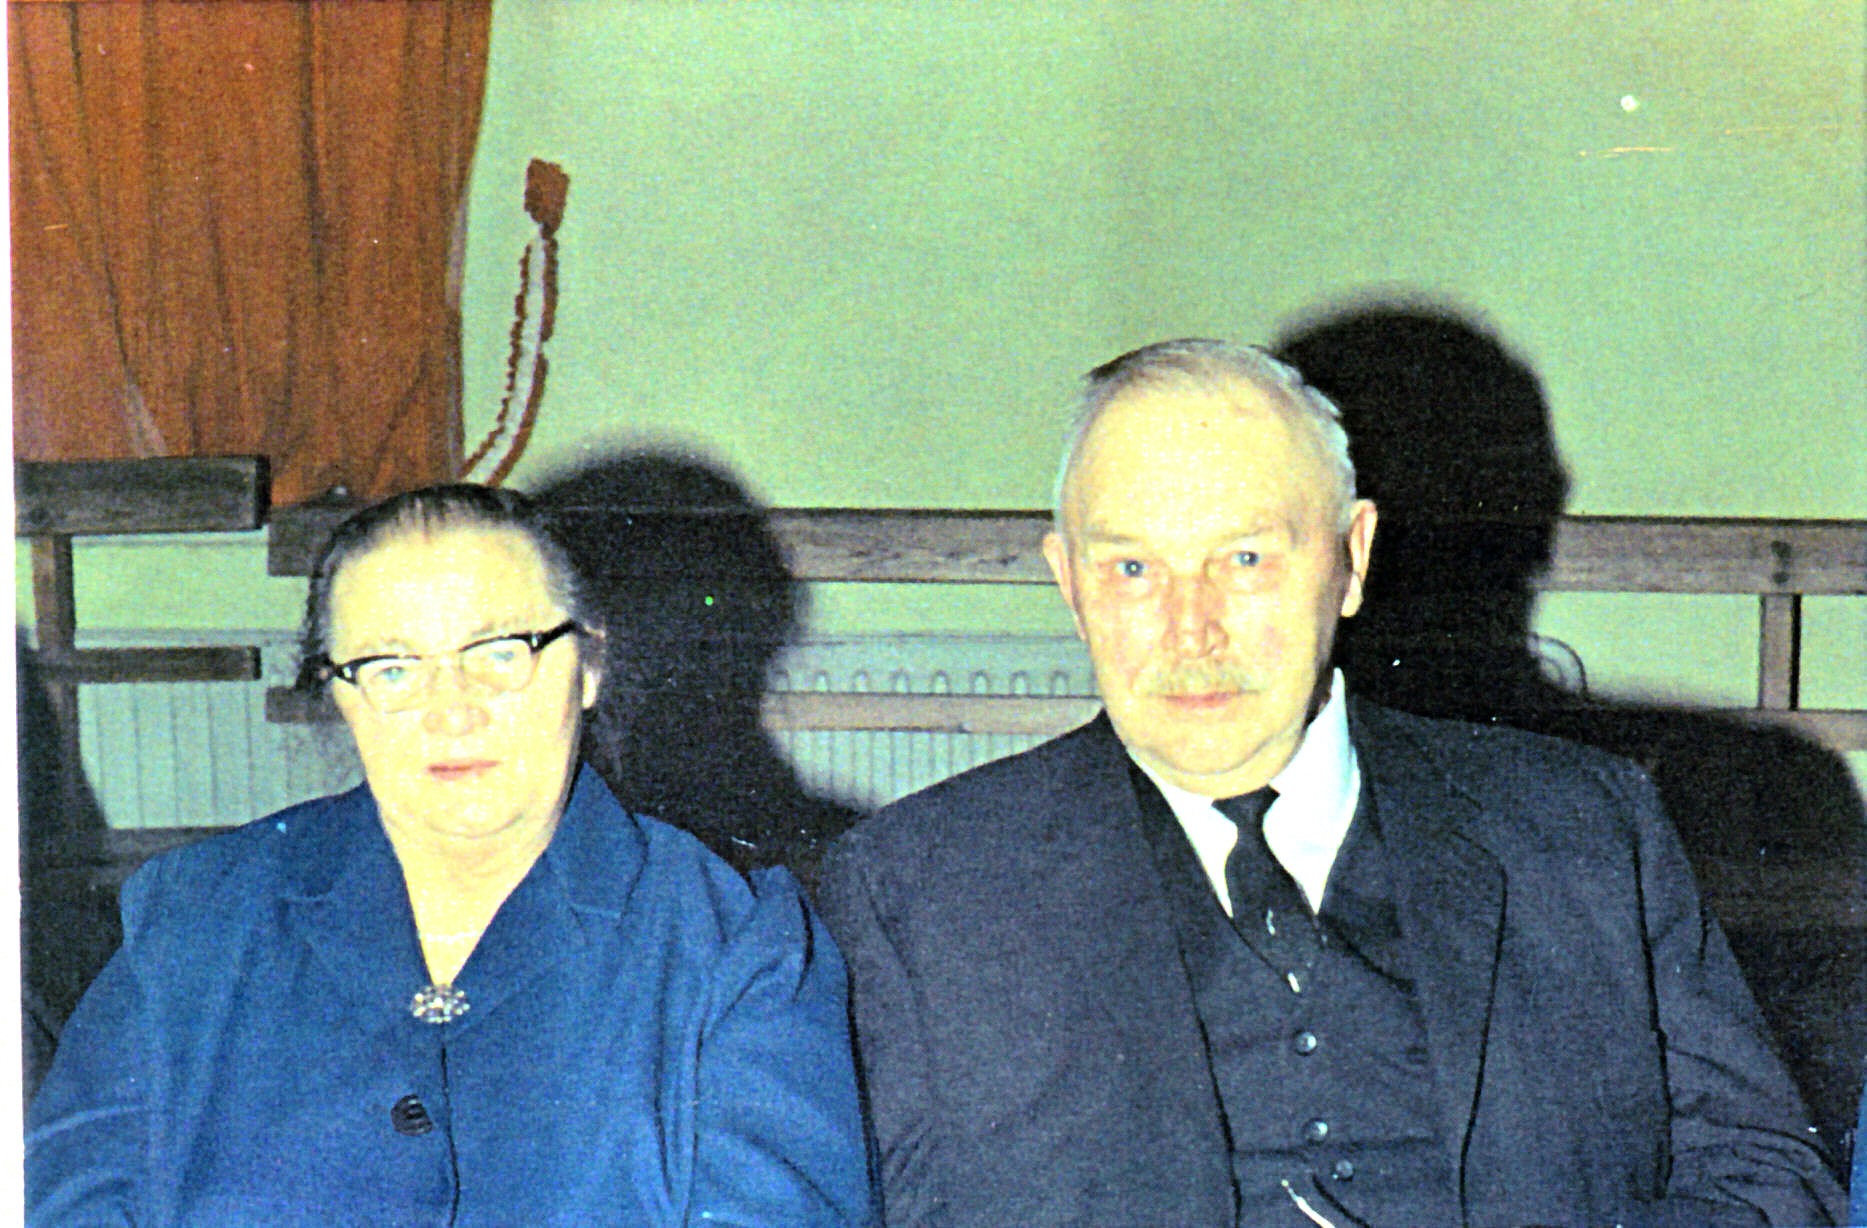 Christine &Peter Jepsen 1970